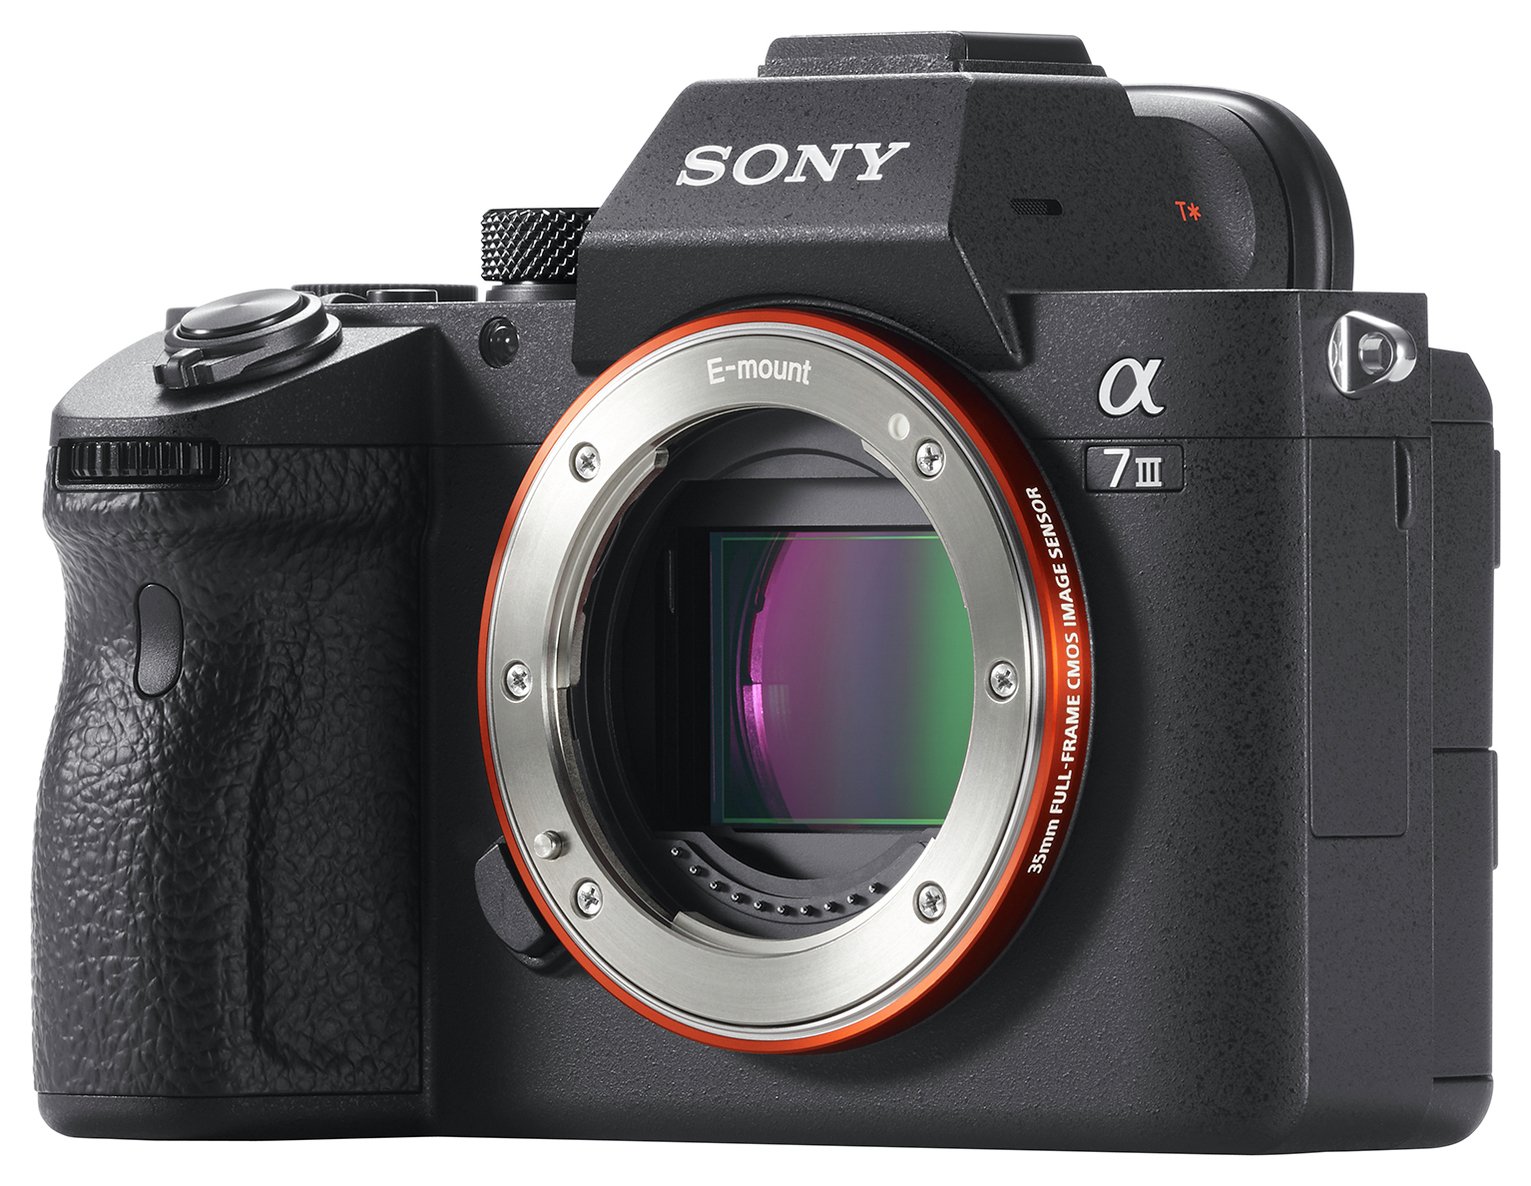 Sony Alpha 7 III Mirrorless Camera Body Review